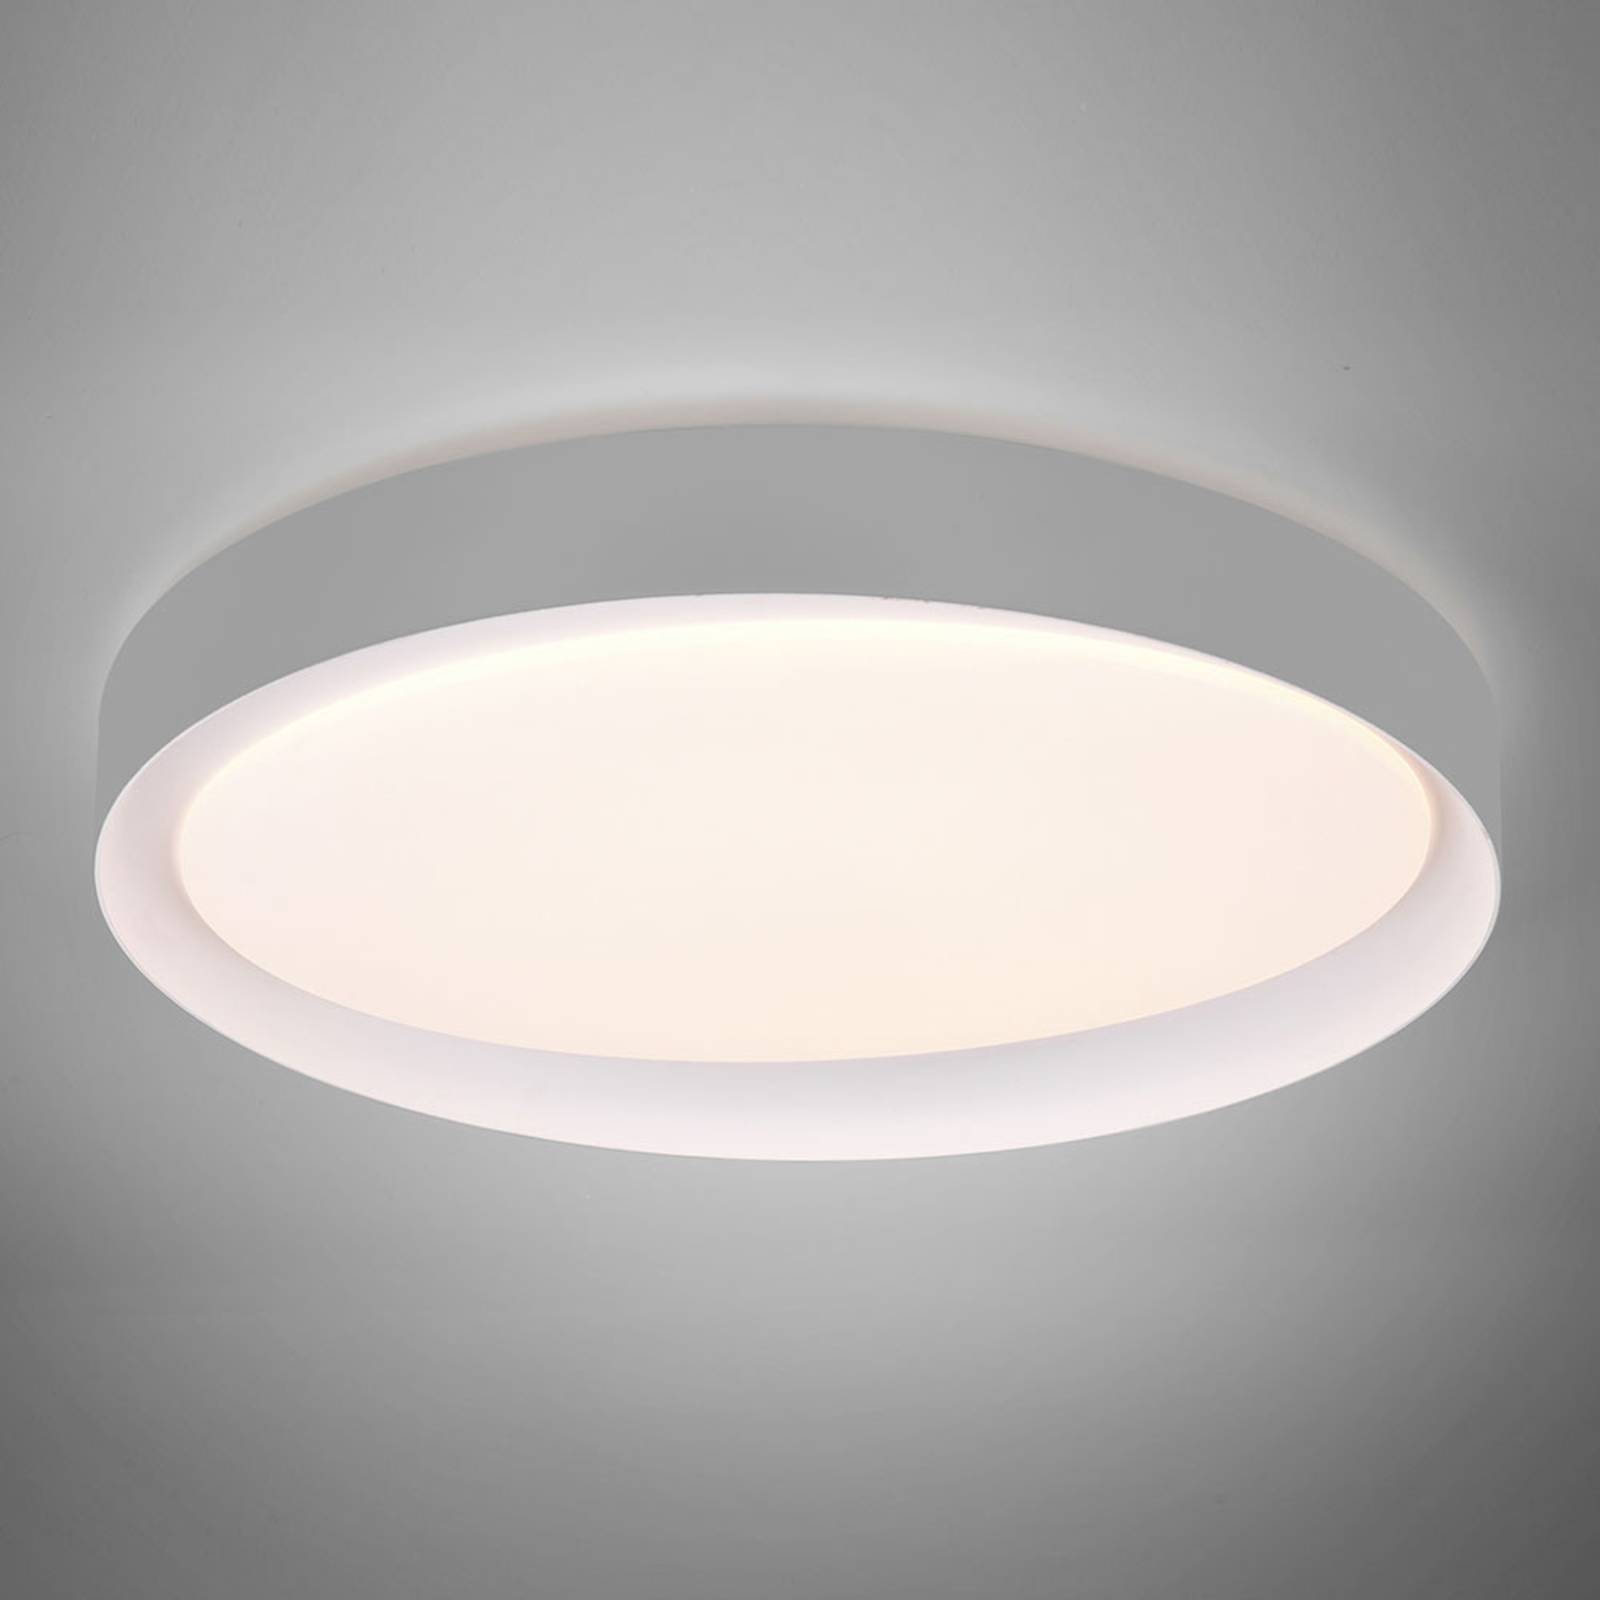 LED-Deckenleuchte Zeta tunable white, grau/weiß